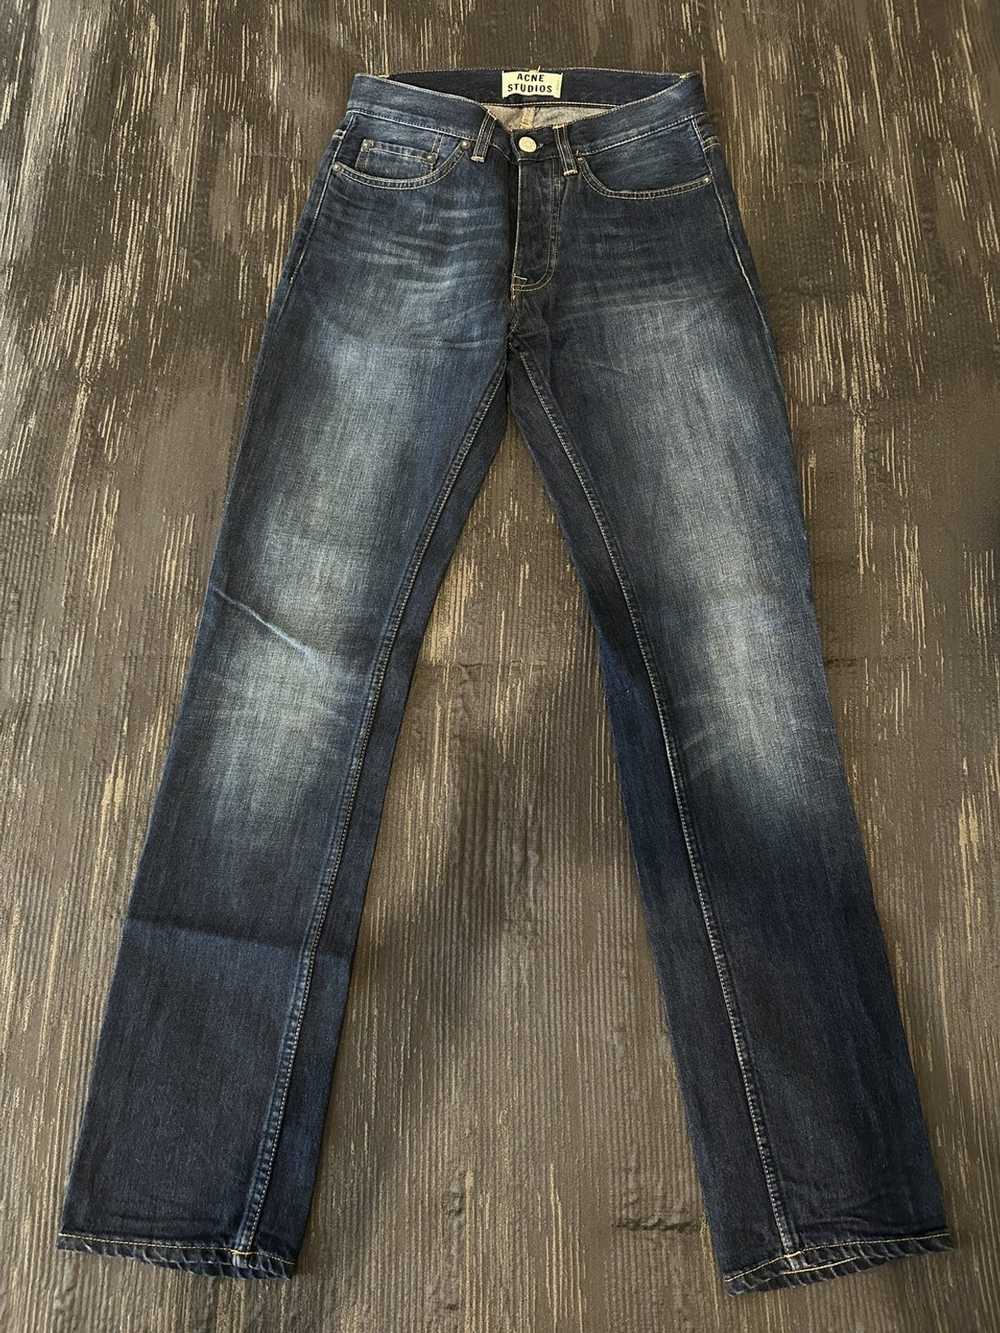 Acne Studios Acne Studios Slim Fit Jeans (29x32) - image 1